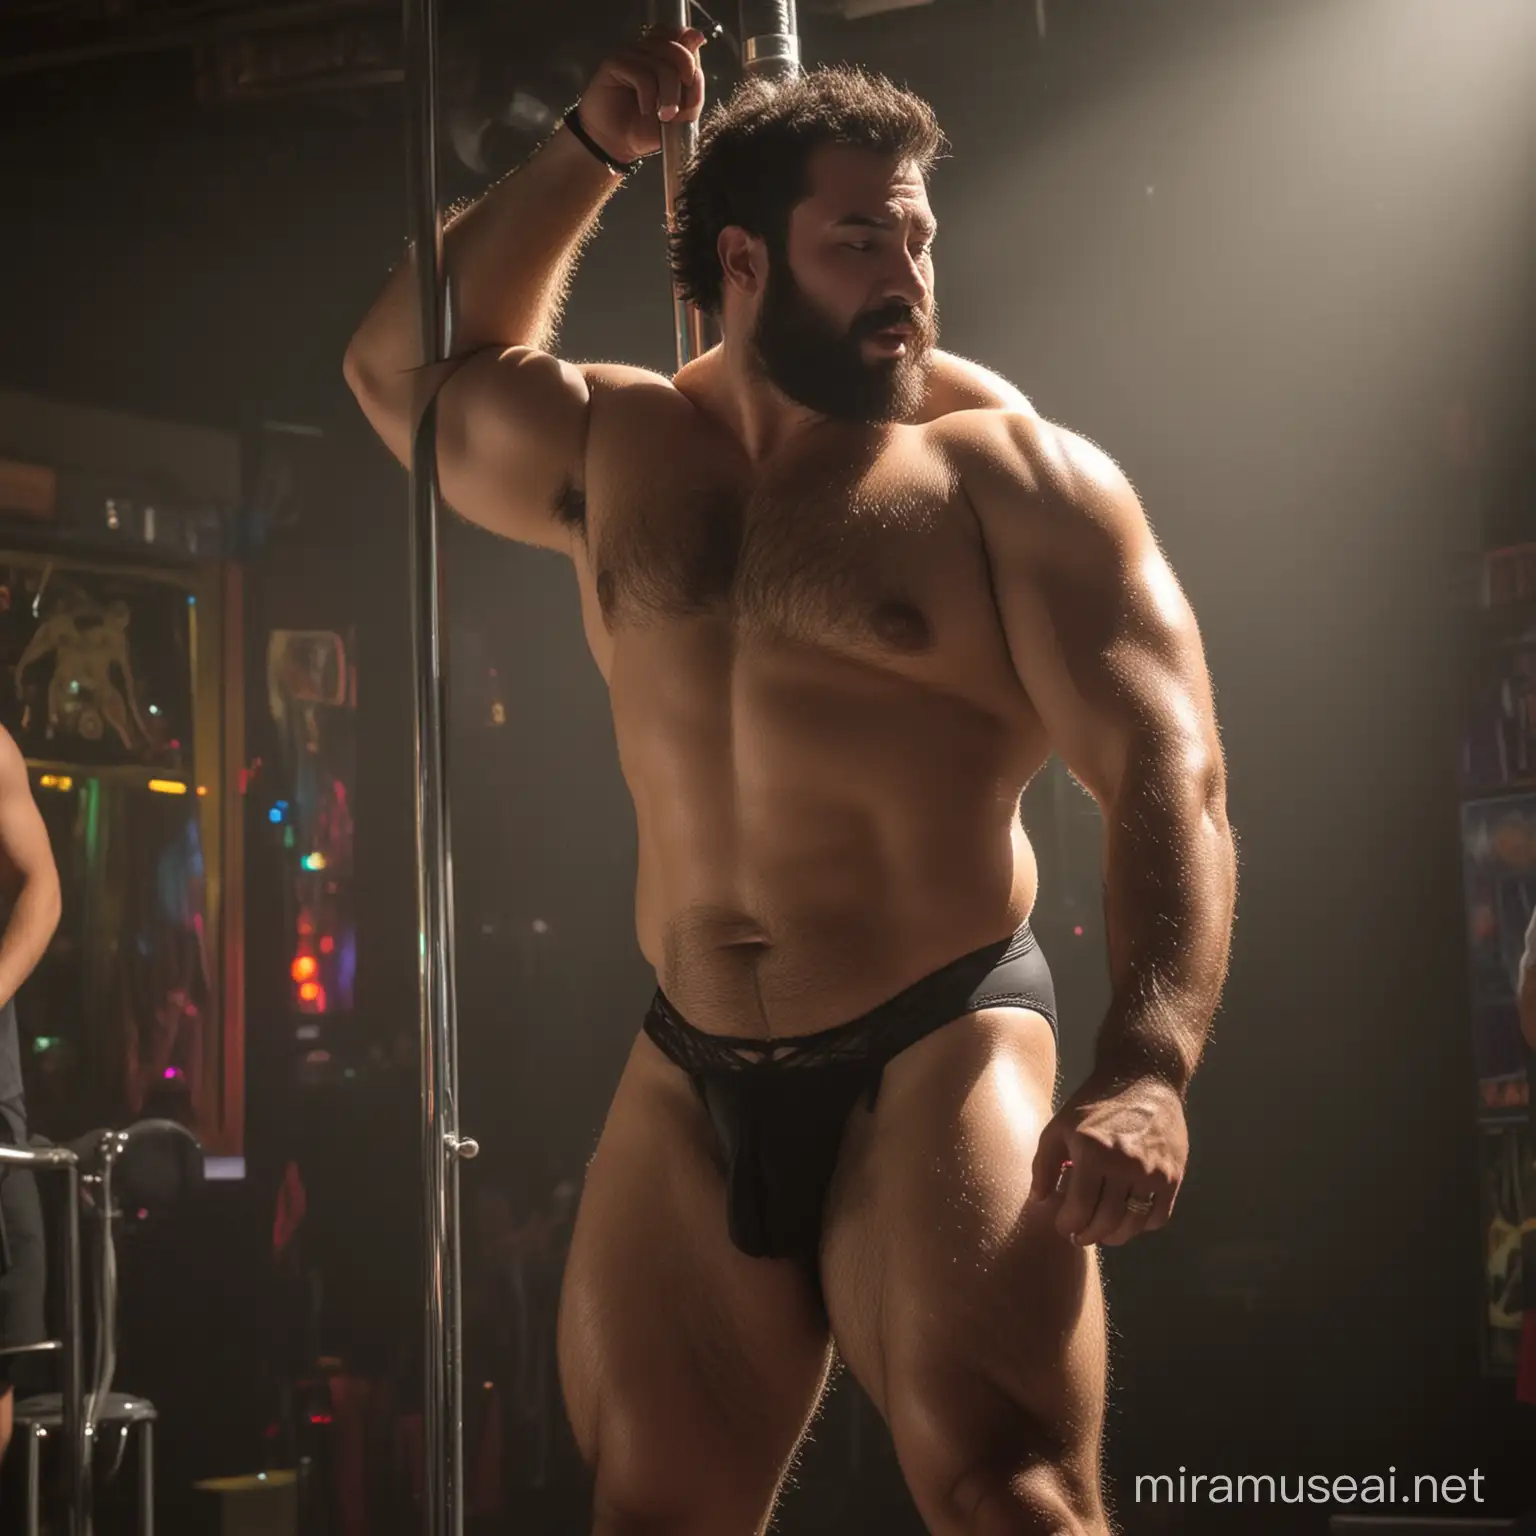 Hispanic Bear in Thong Dancing in Gay Club